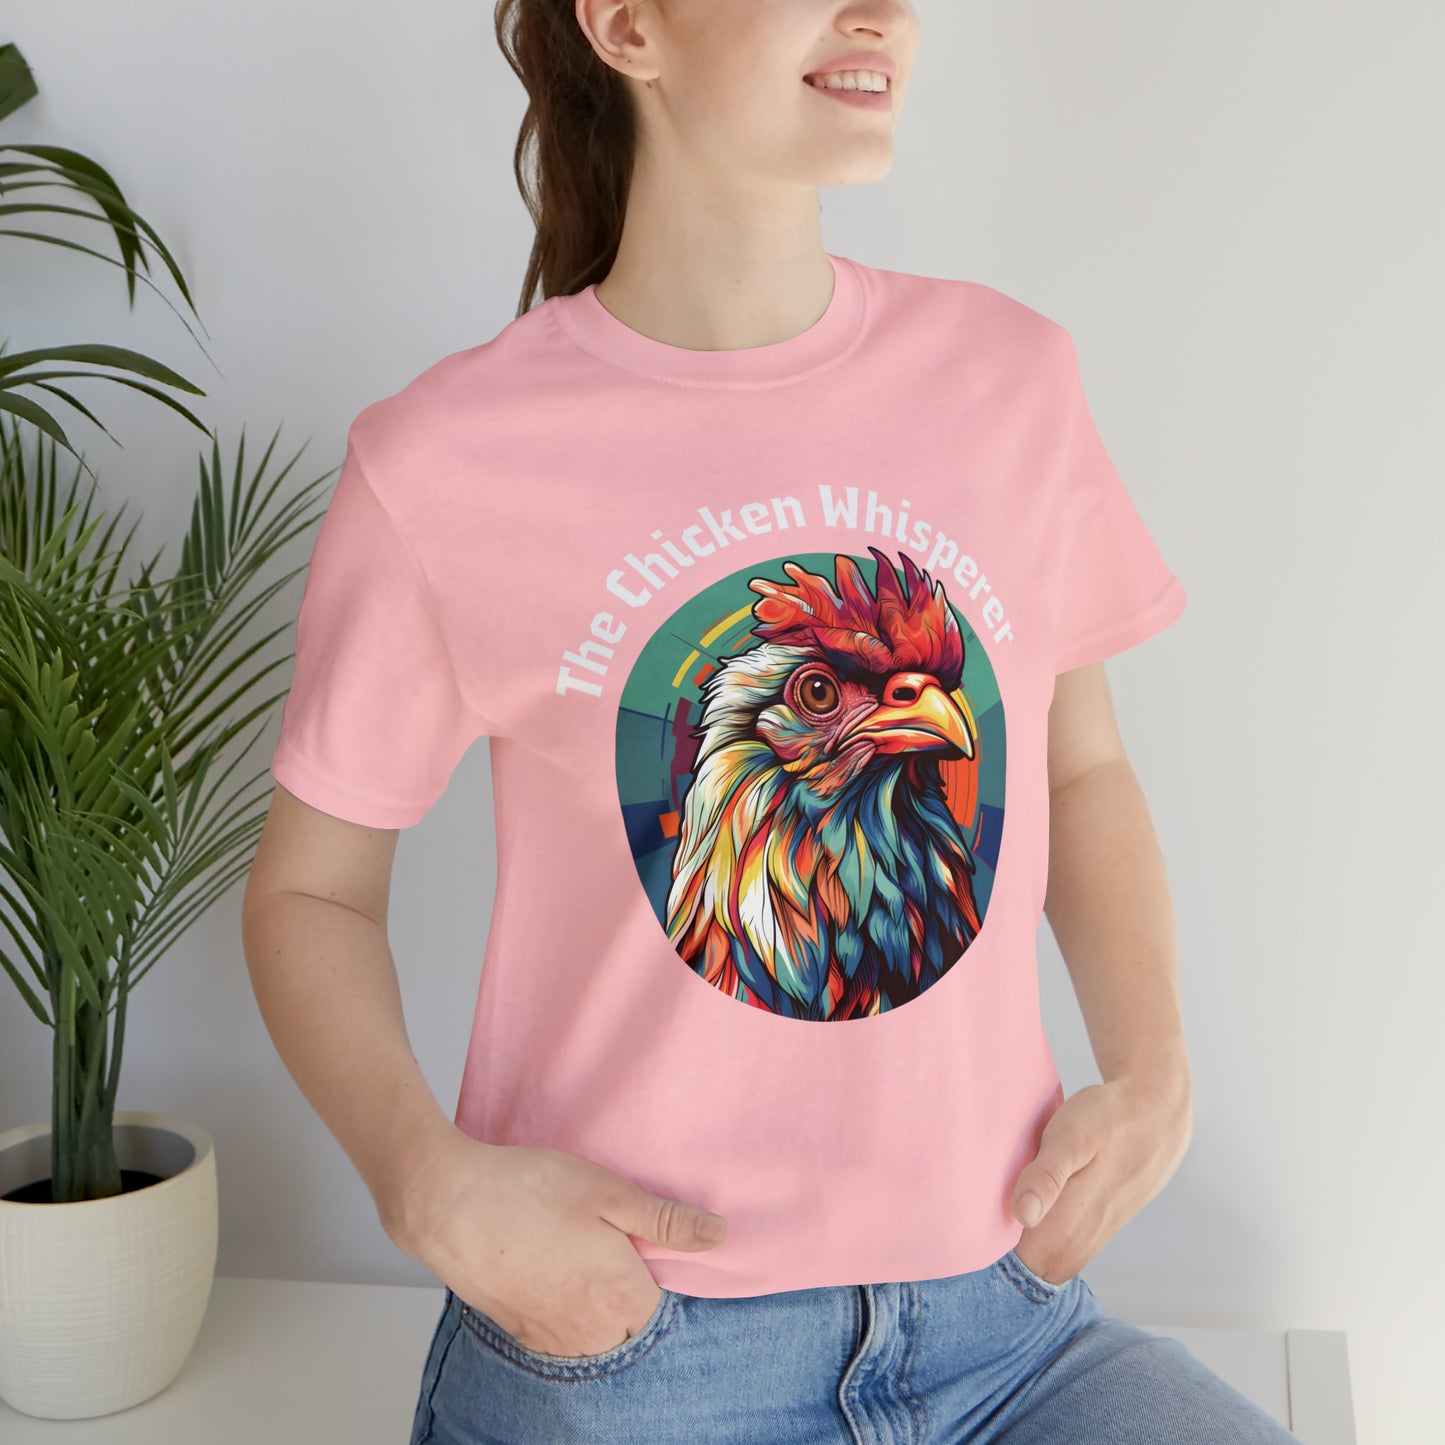 The Chicken Whisperer Shirt - Retro Vintage Chicken Lover Shirt Funny Chicken Shirt farming t-shirt Chicken Shirt Women's Chicken Shirt, Farm Tees Farm Shirt, Chicken Lover Shirt